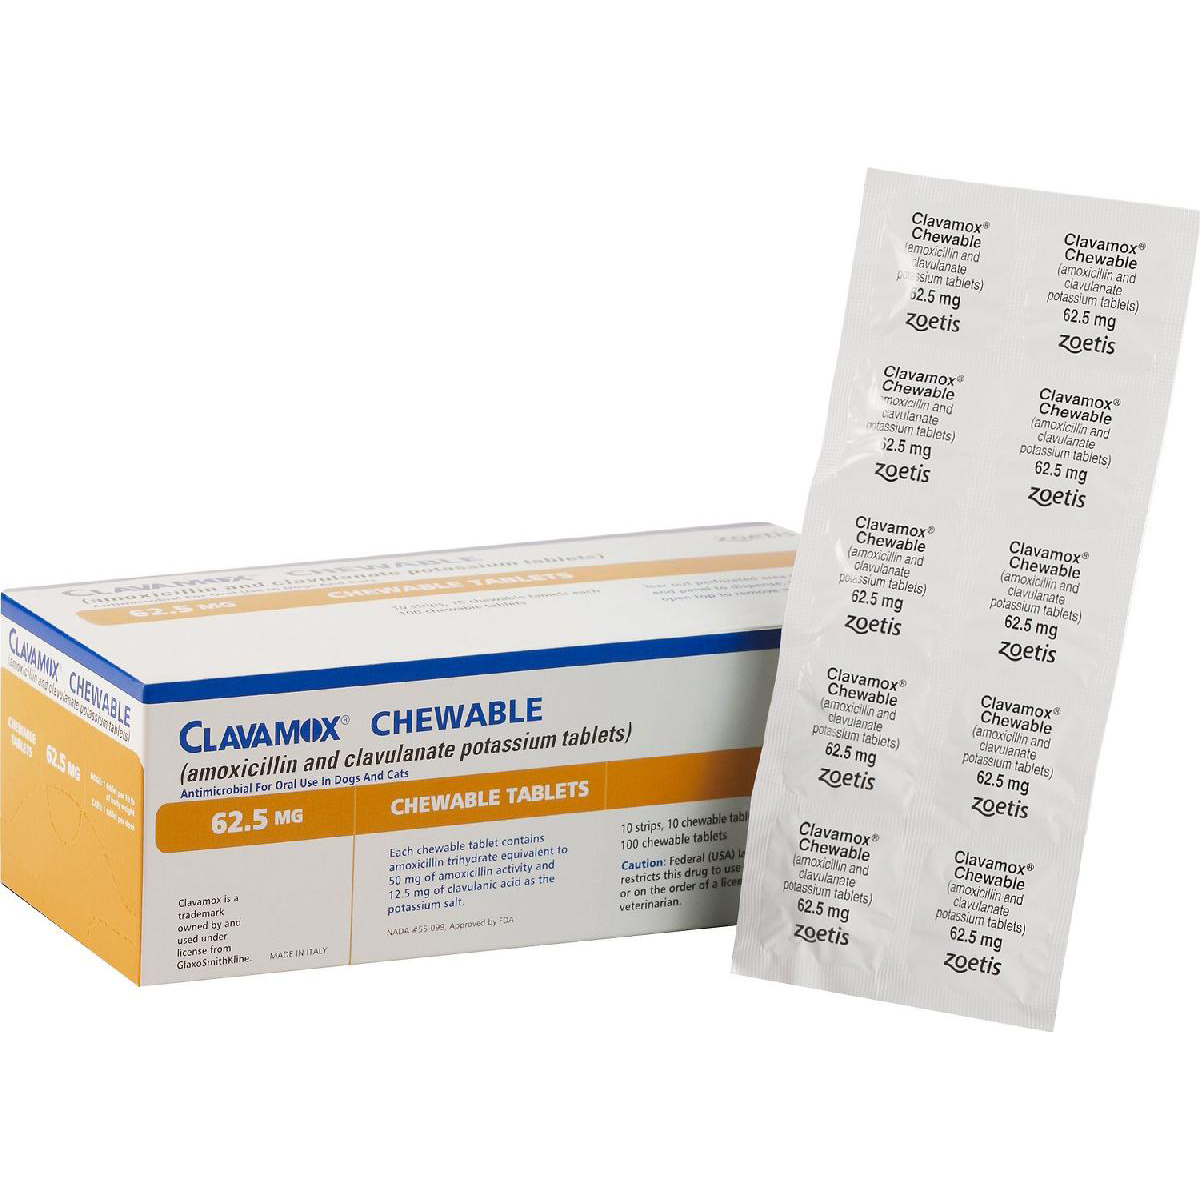 Clavamox For Dogs Cats Zoetis Animal Health Safe Pharmacy Antibiotics Dog Rx Pet